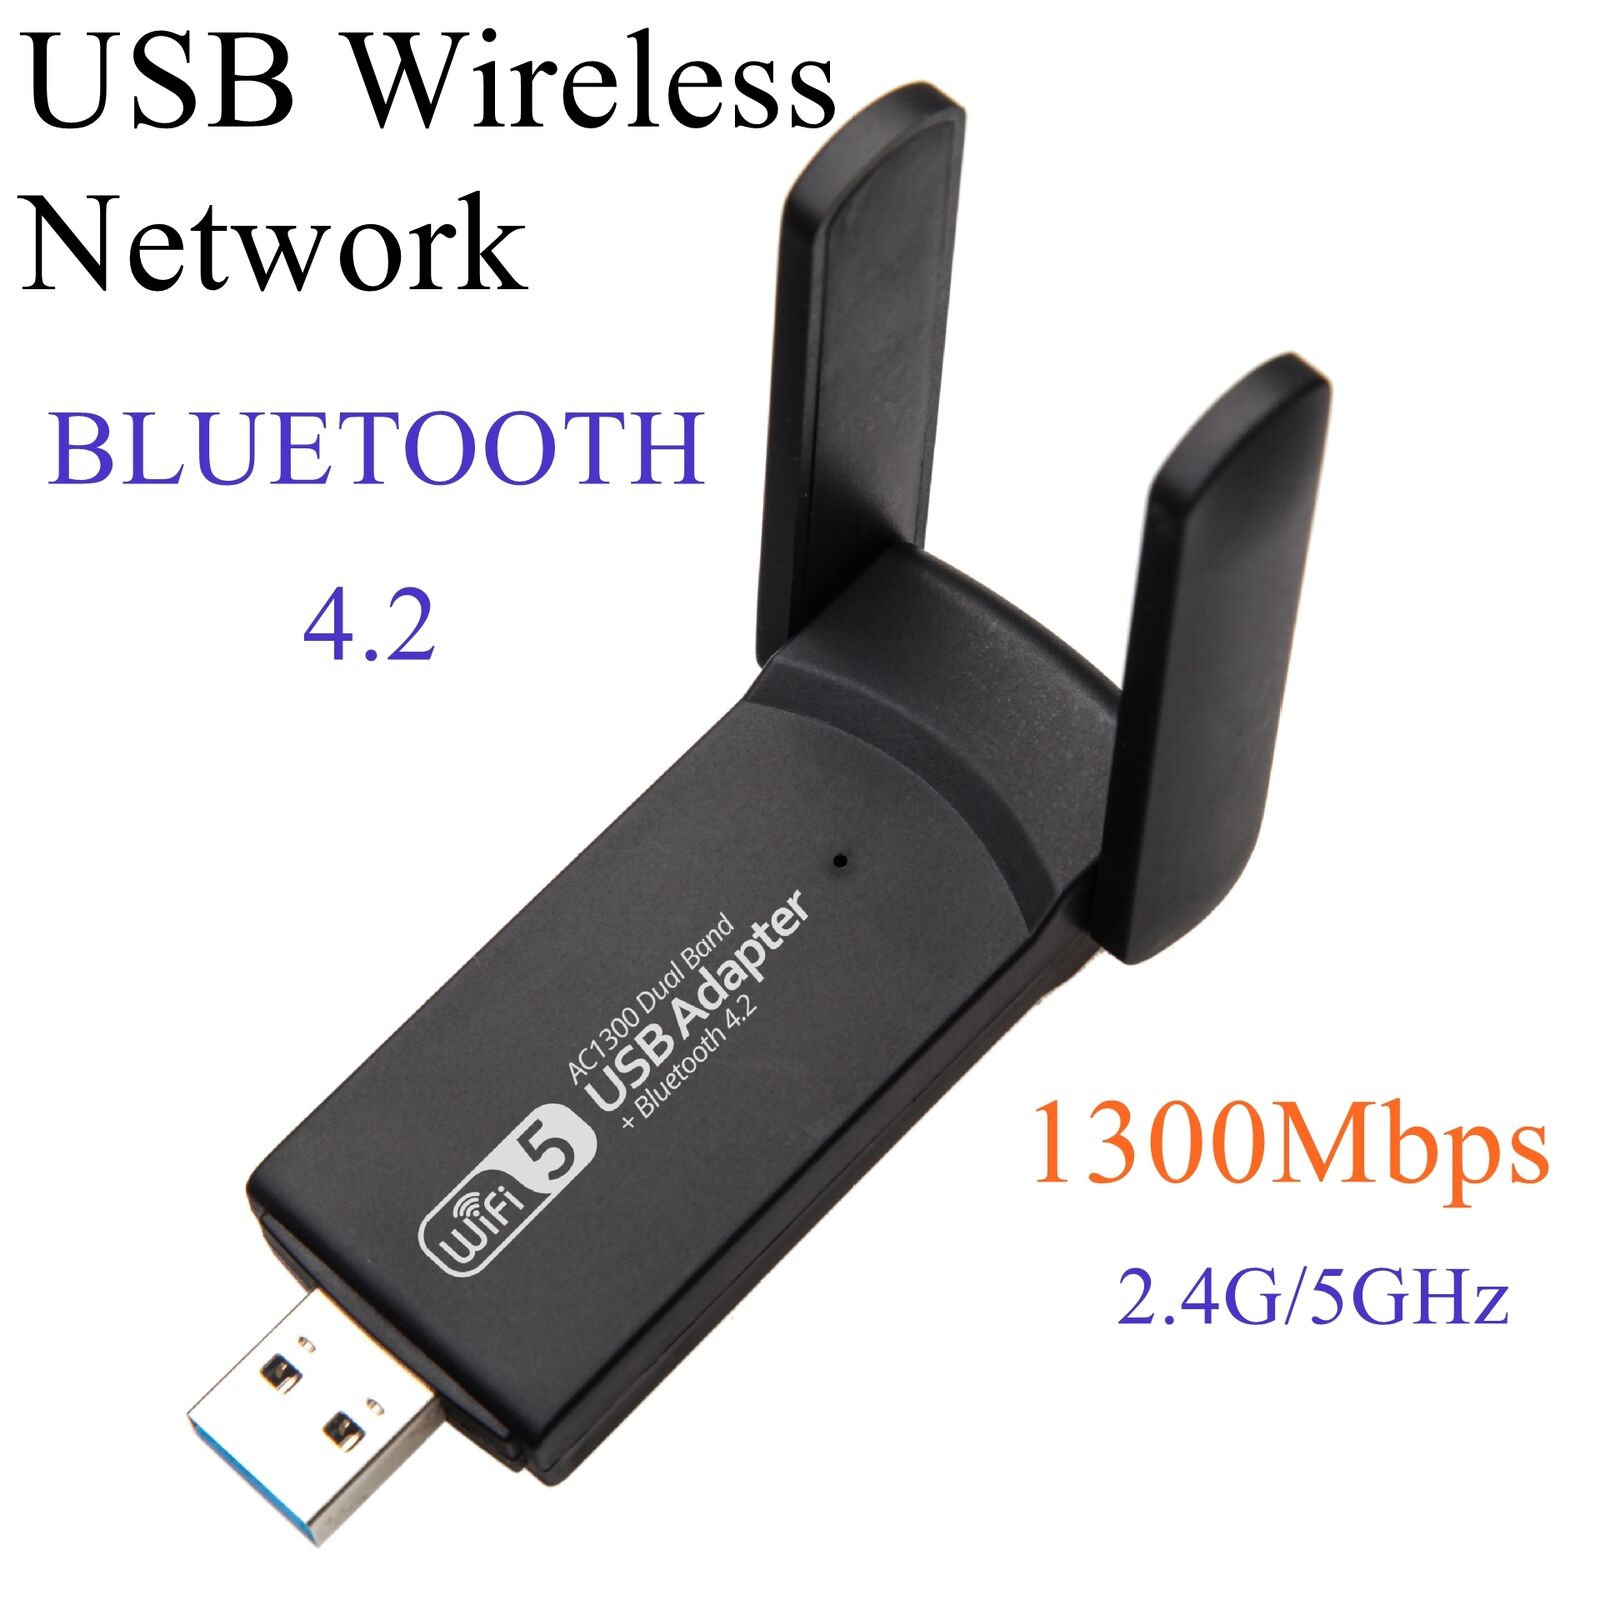 USB Wireless WiFi Bluetooth Adapter 1300Mbps 2.4G/5GHz